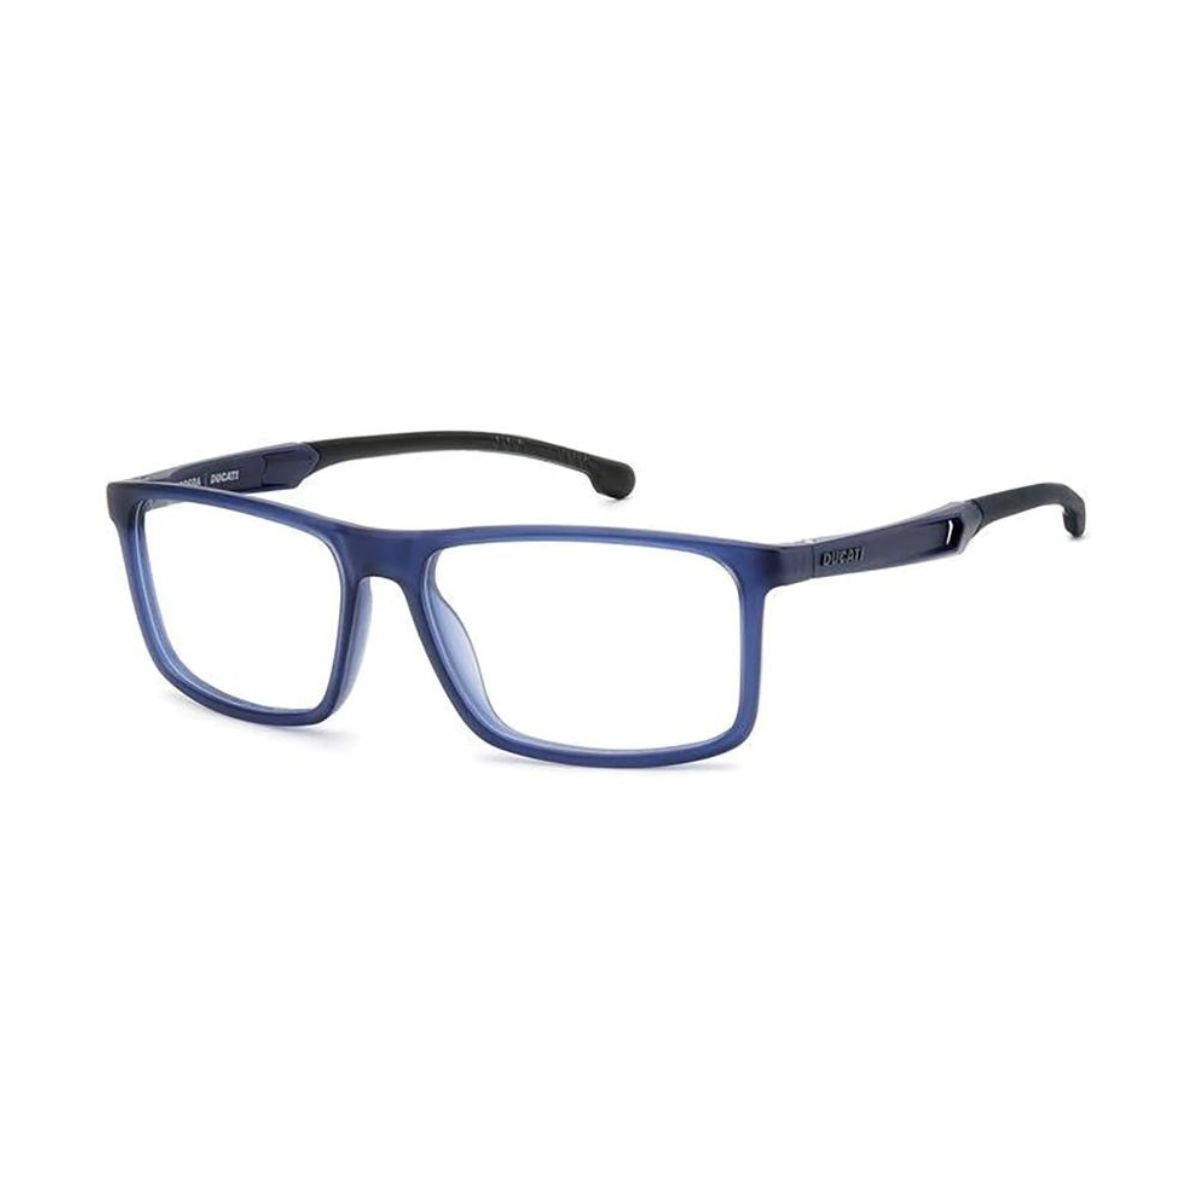 "buy Carrera CARDUC 024 FLL spectacle eyewear frame for men's at optorium"